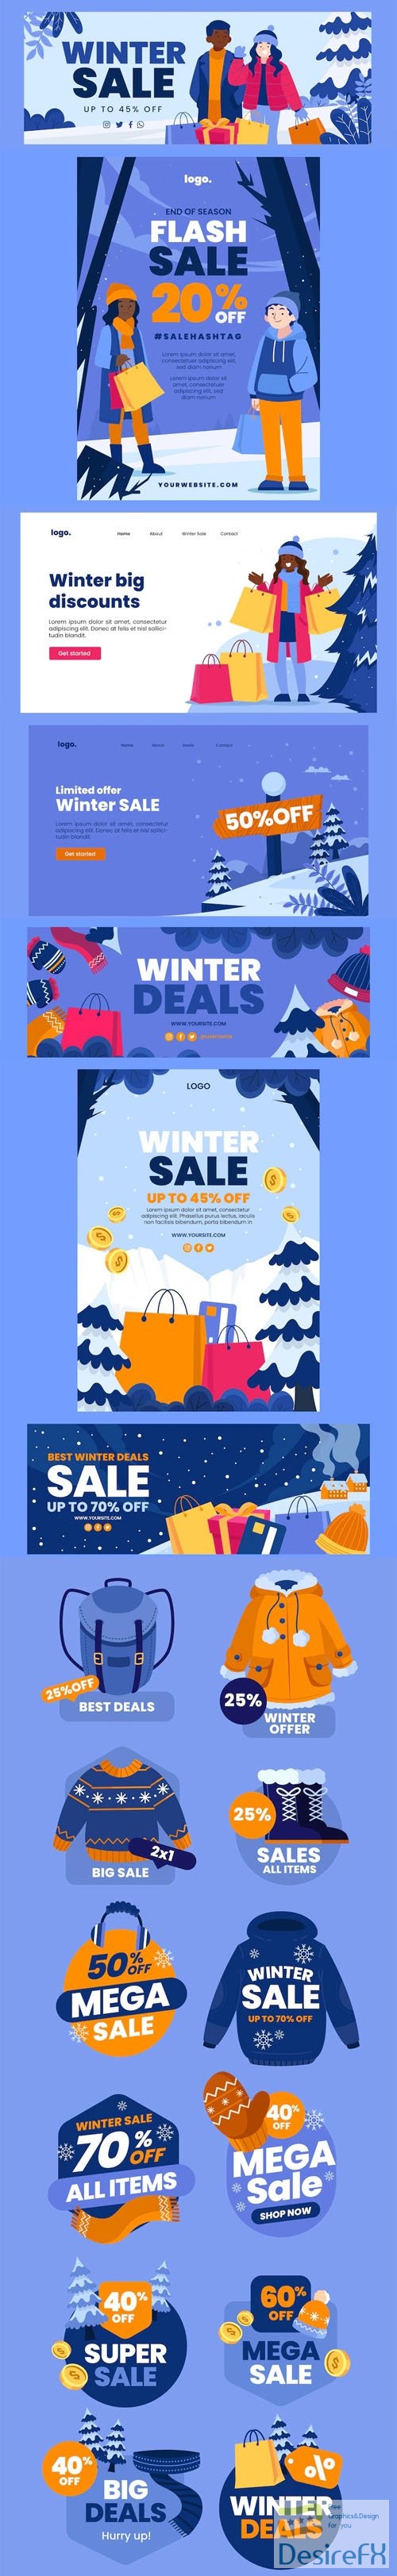 10 Hand Drawn Winter Sales Flat Marketing Vector Pack